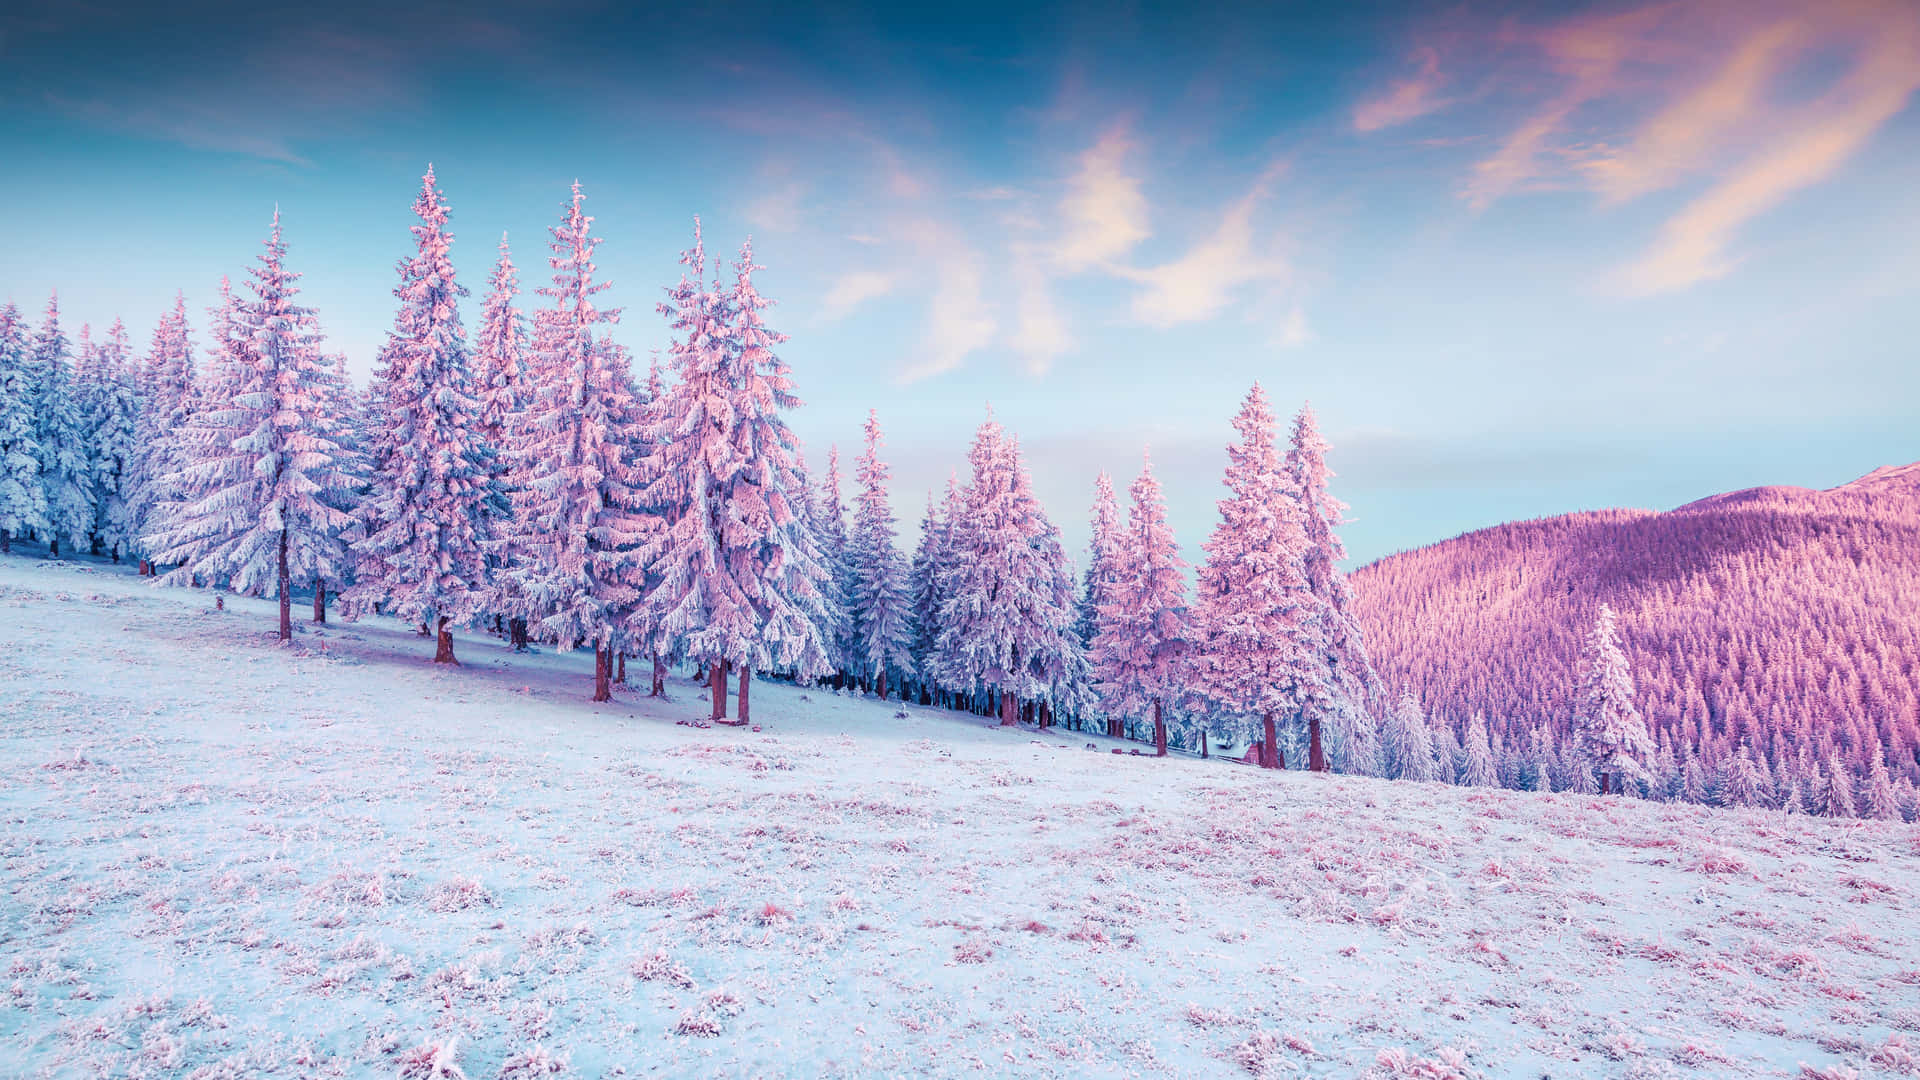 "Take a Stroll Through the Crisp, Beautiful Winter Wonderland" Wallpaper